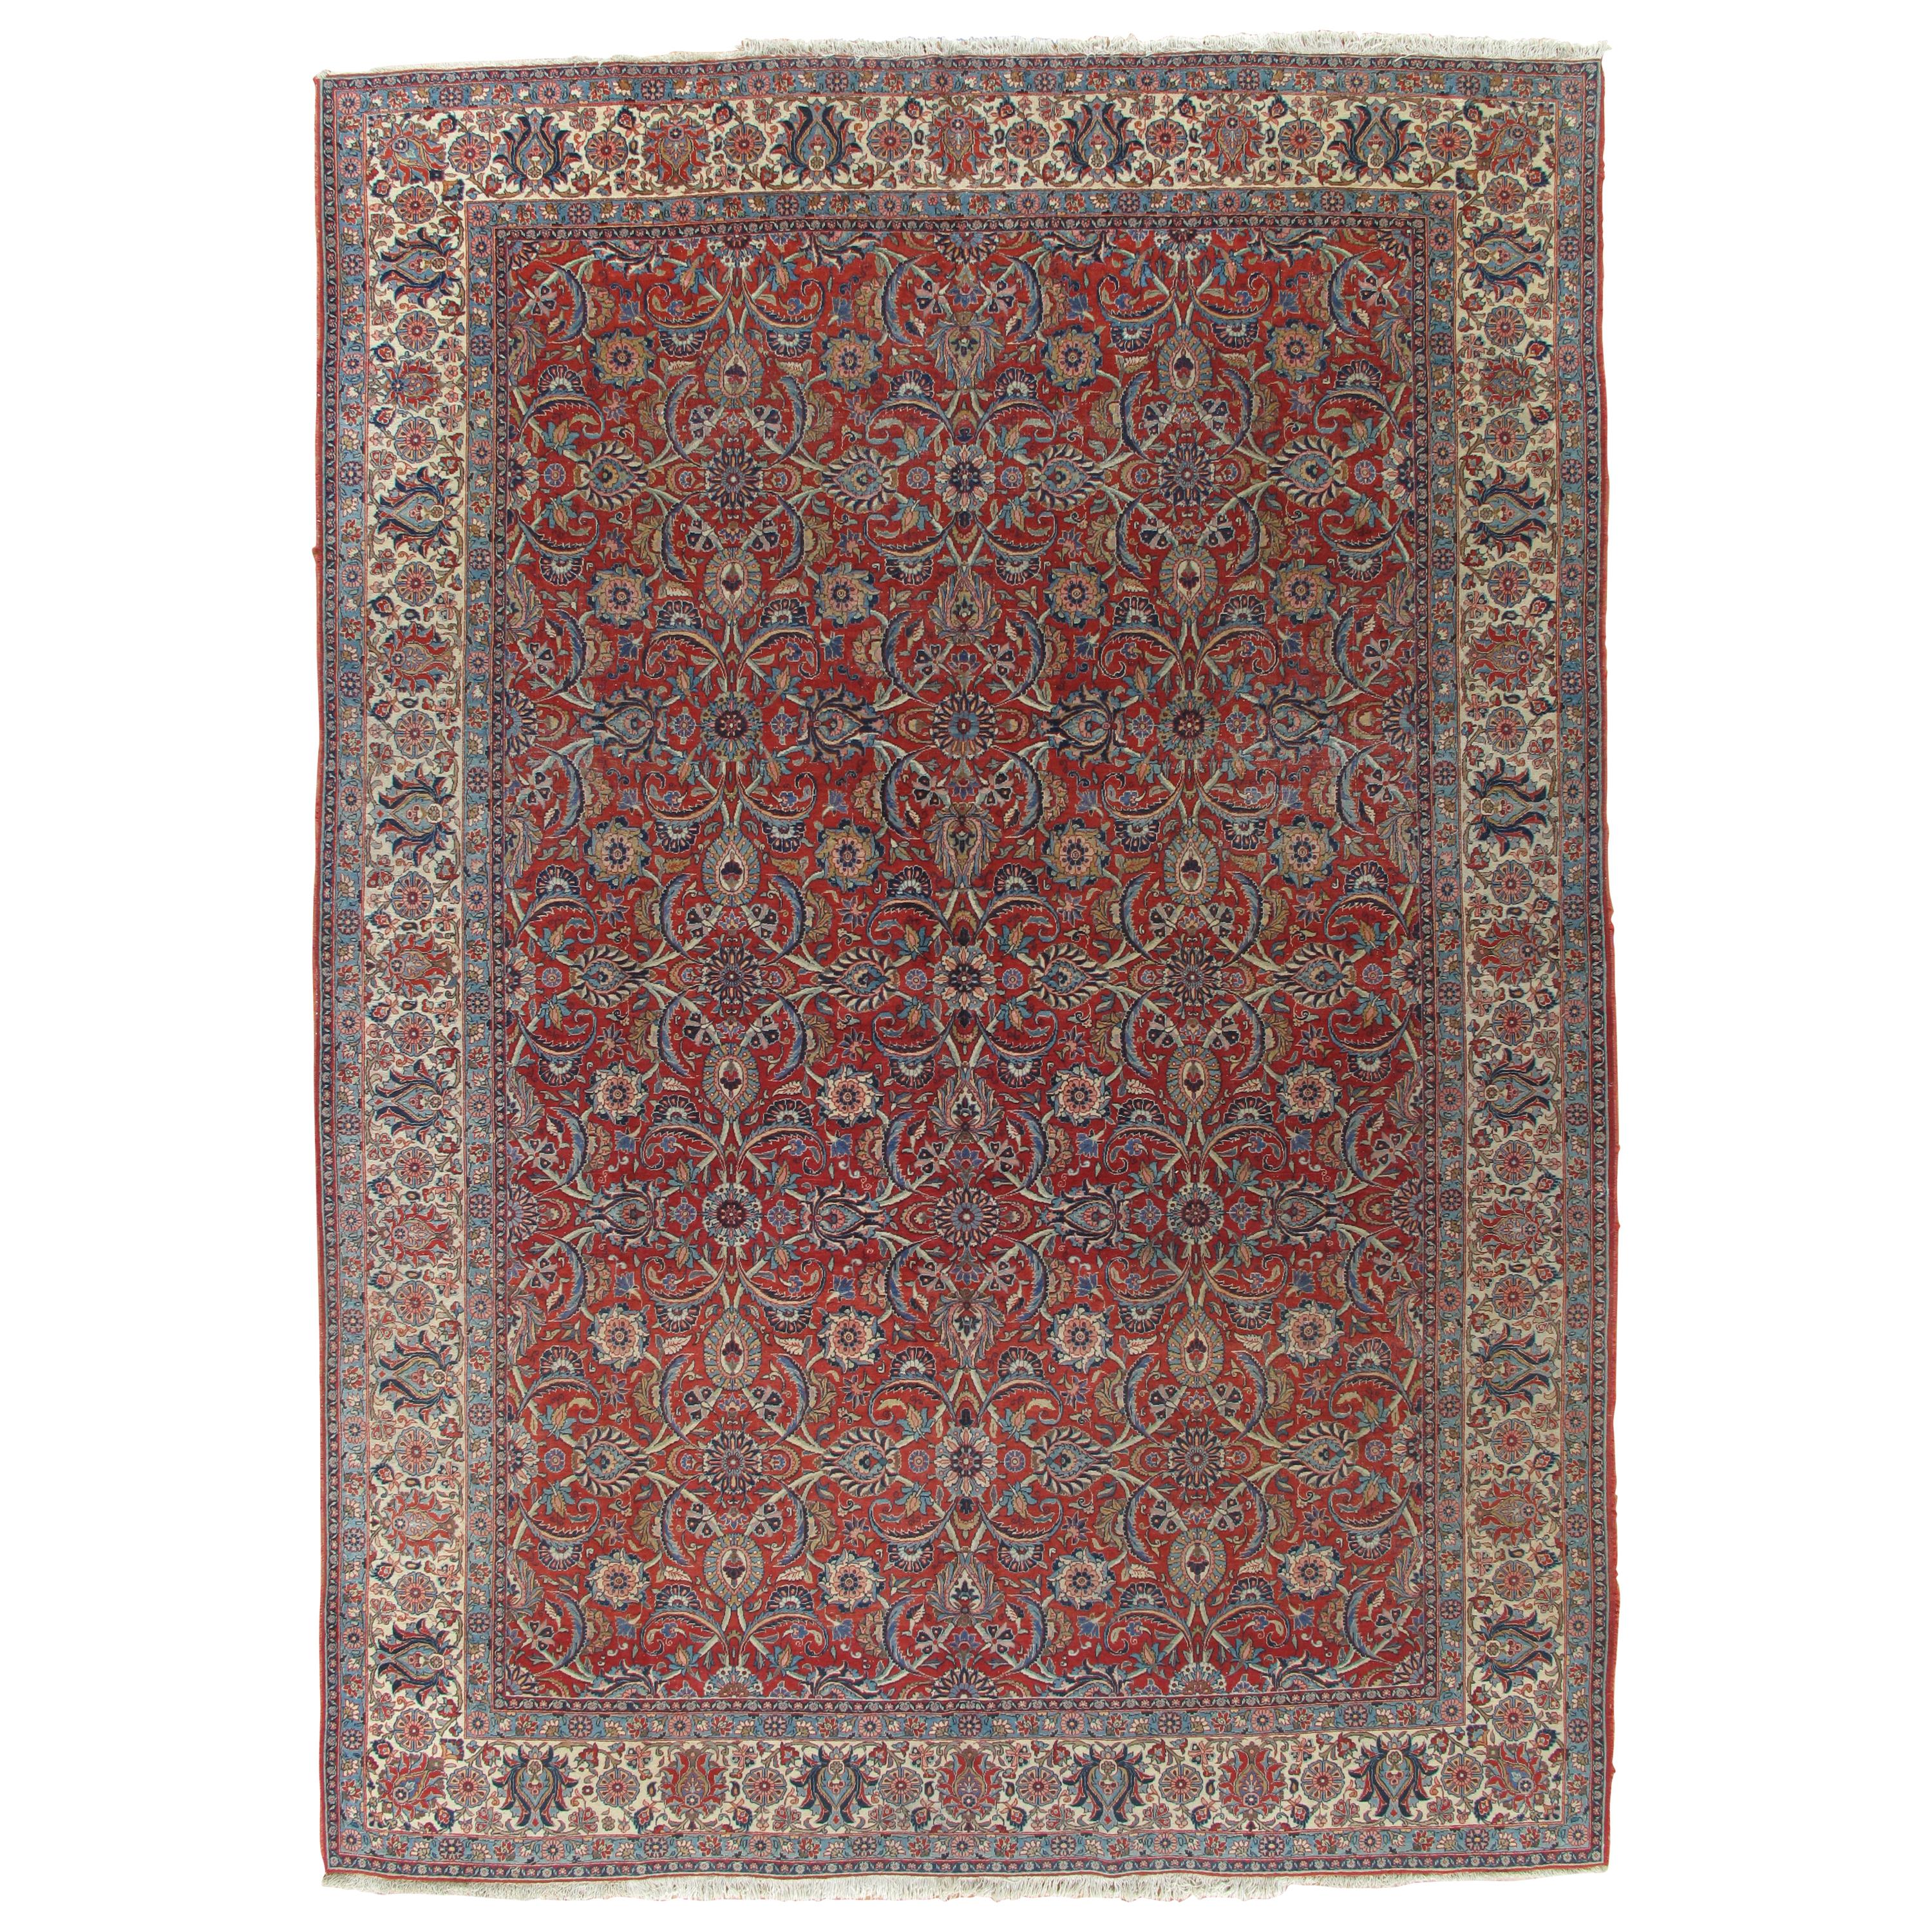 Antique Dabir Kashan Carpet, Handmade Wool Carpet, Red, Navy, Ivory